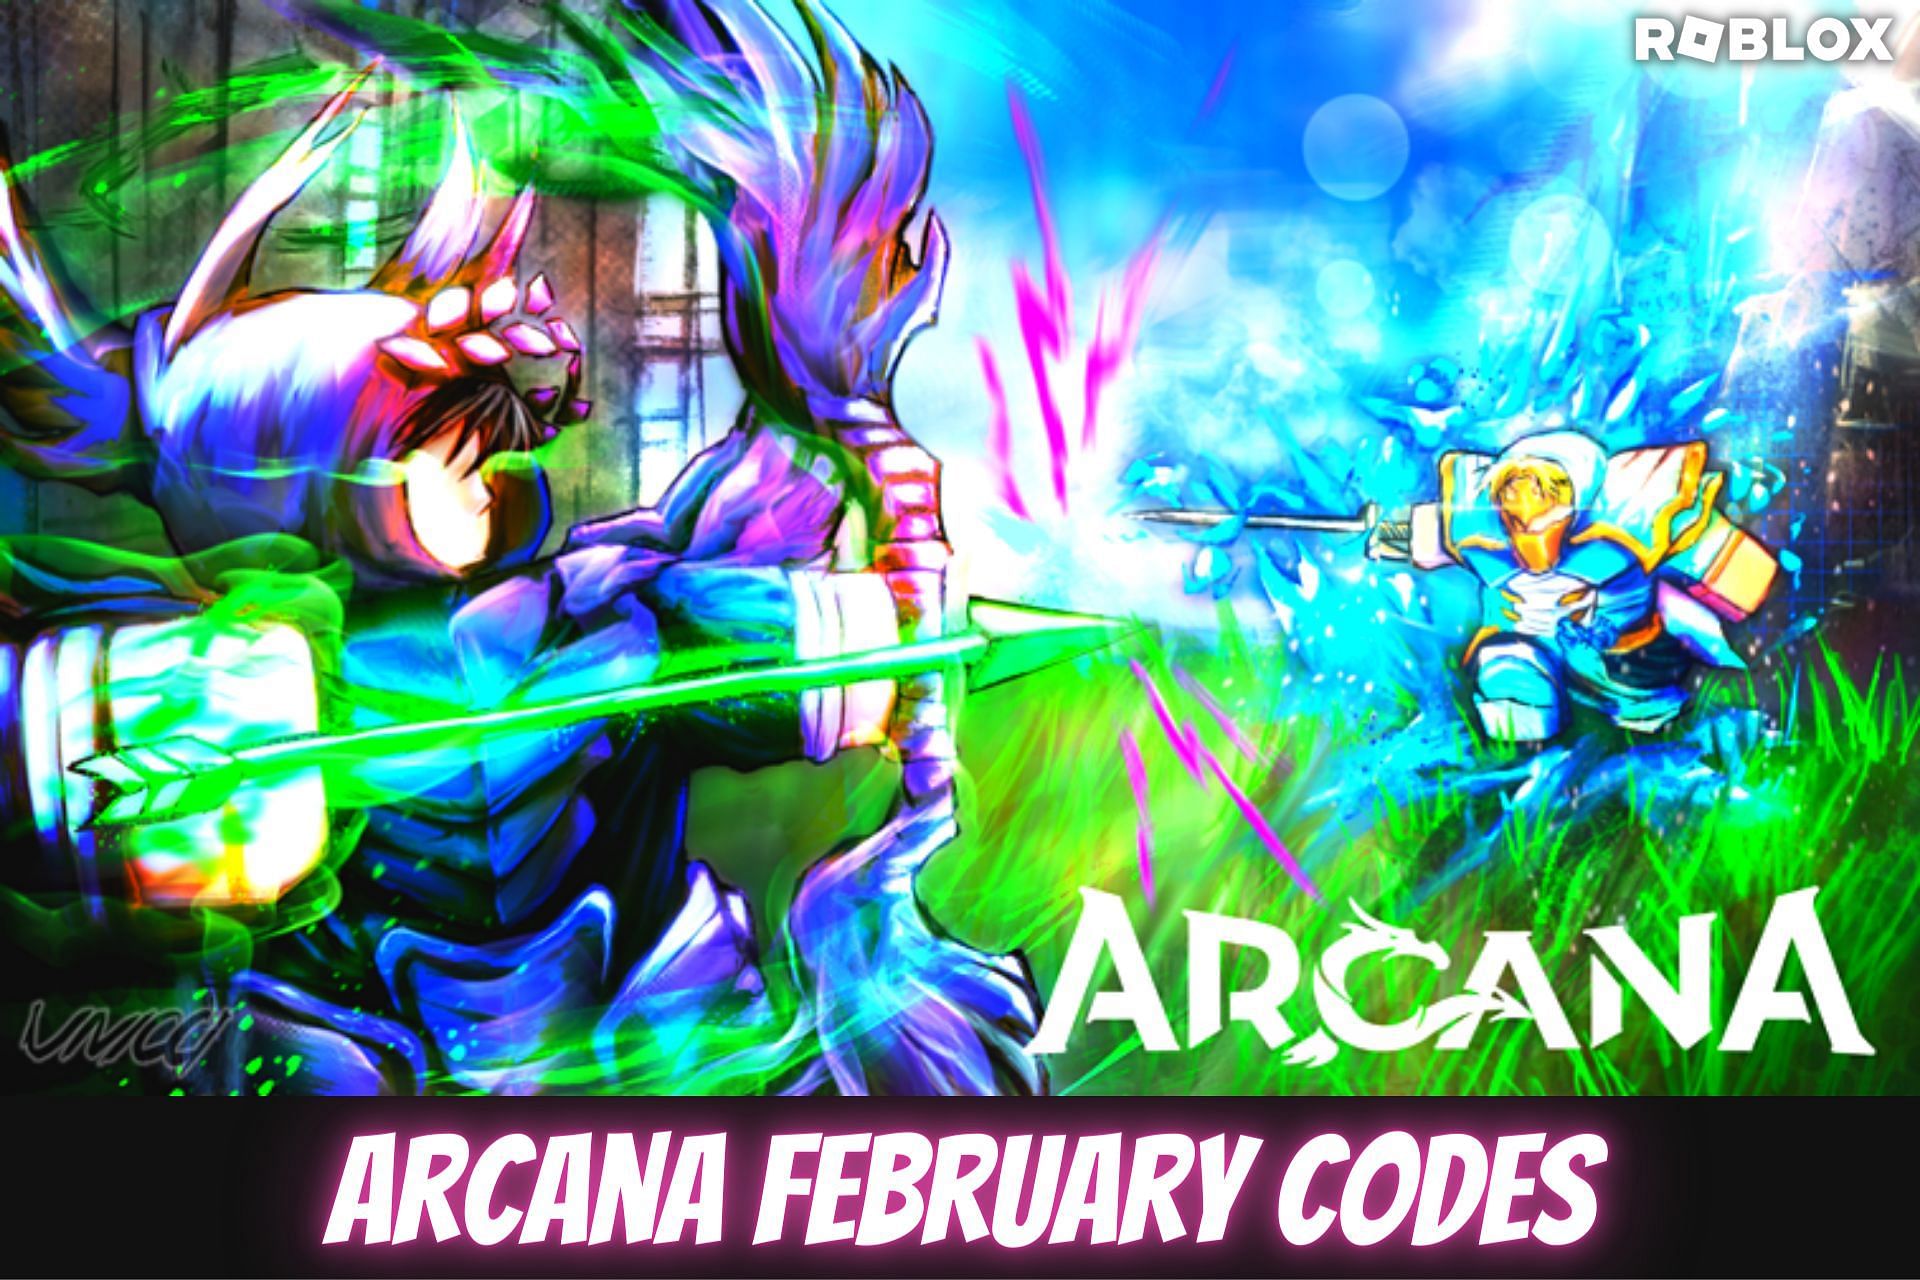 Roblox Arcana February codes